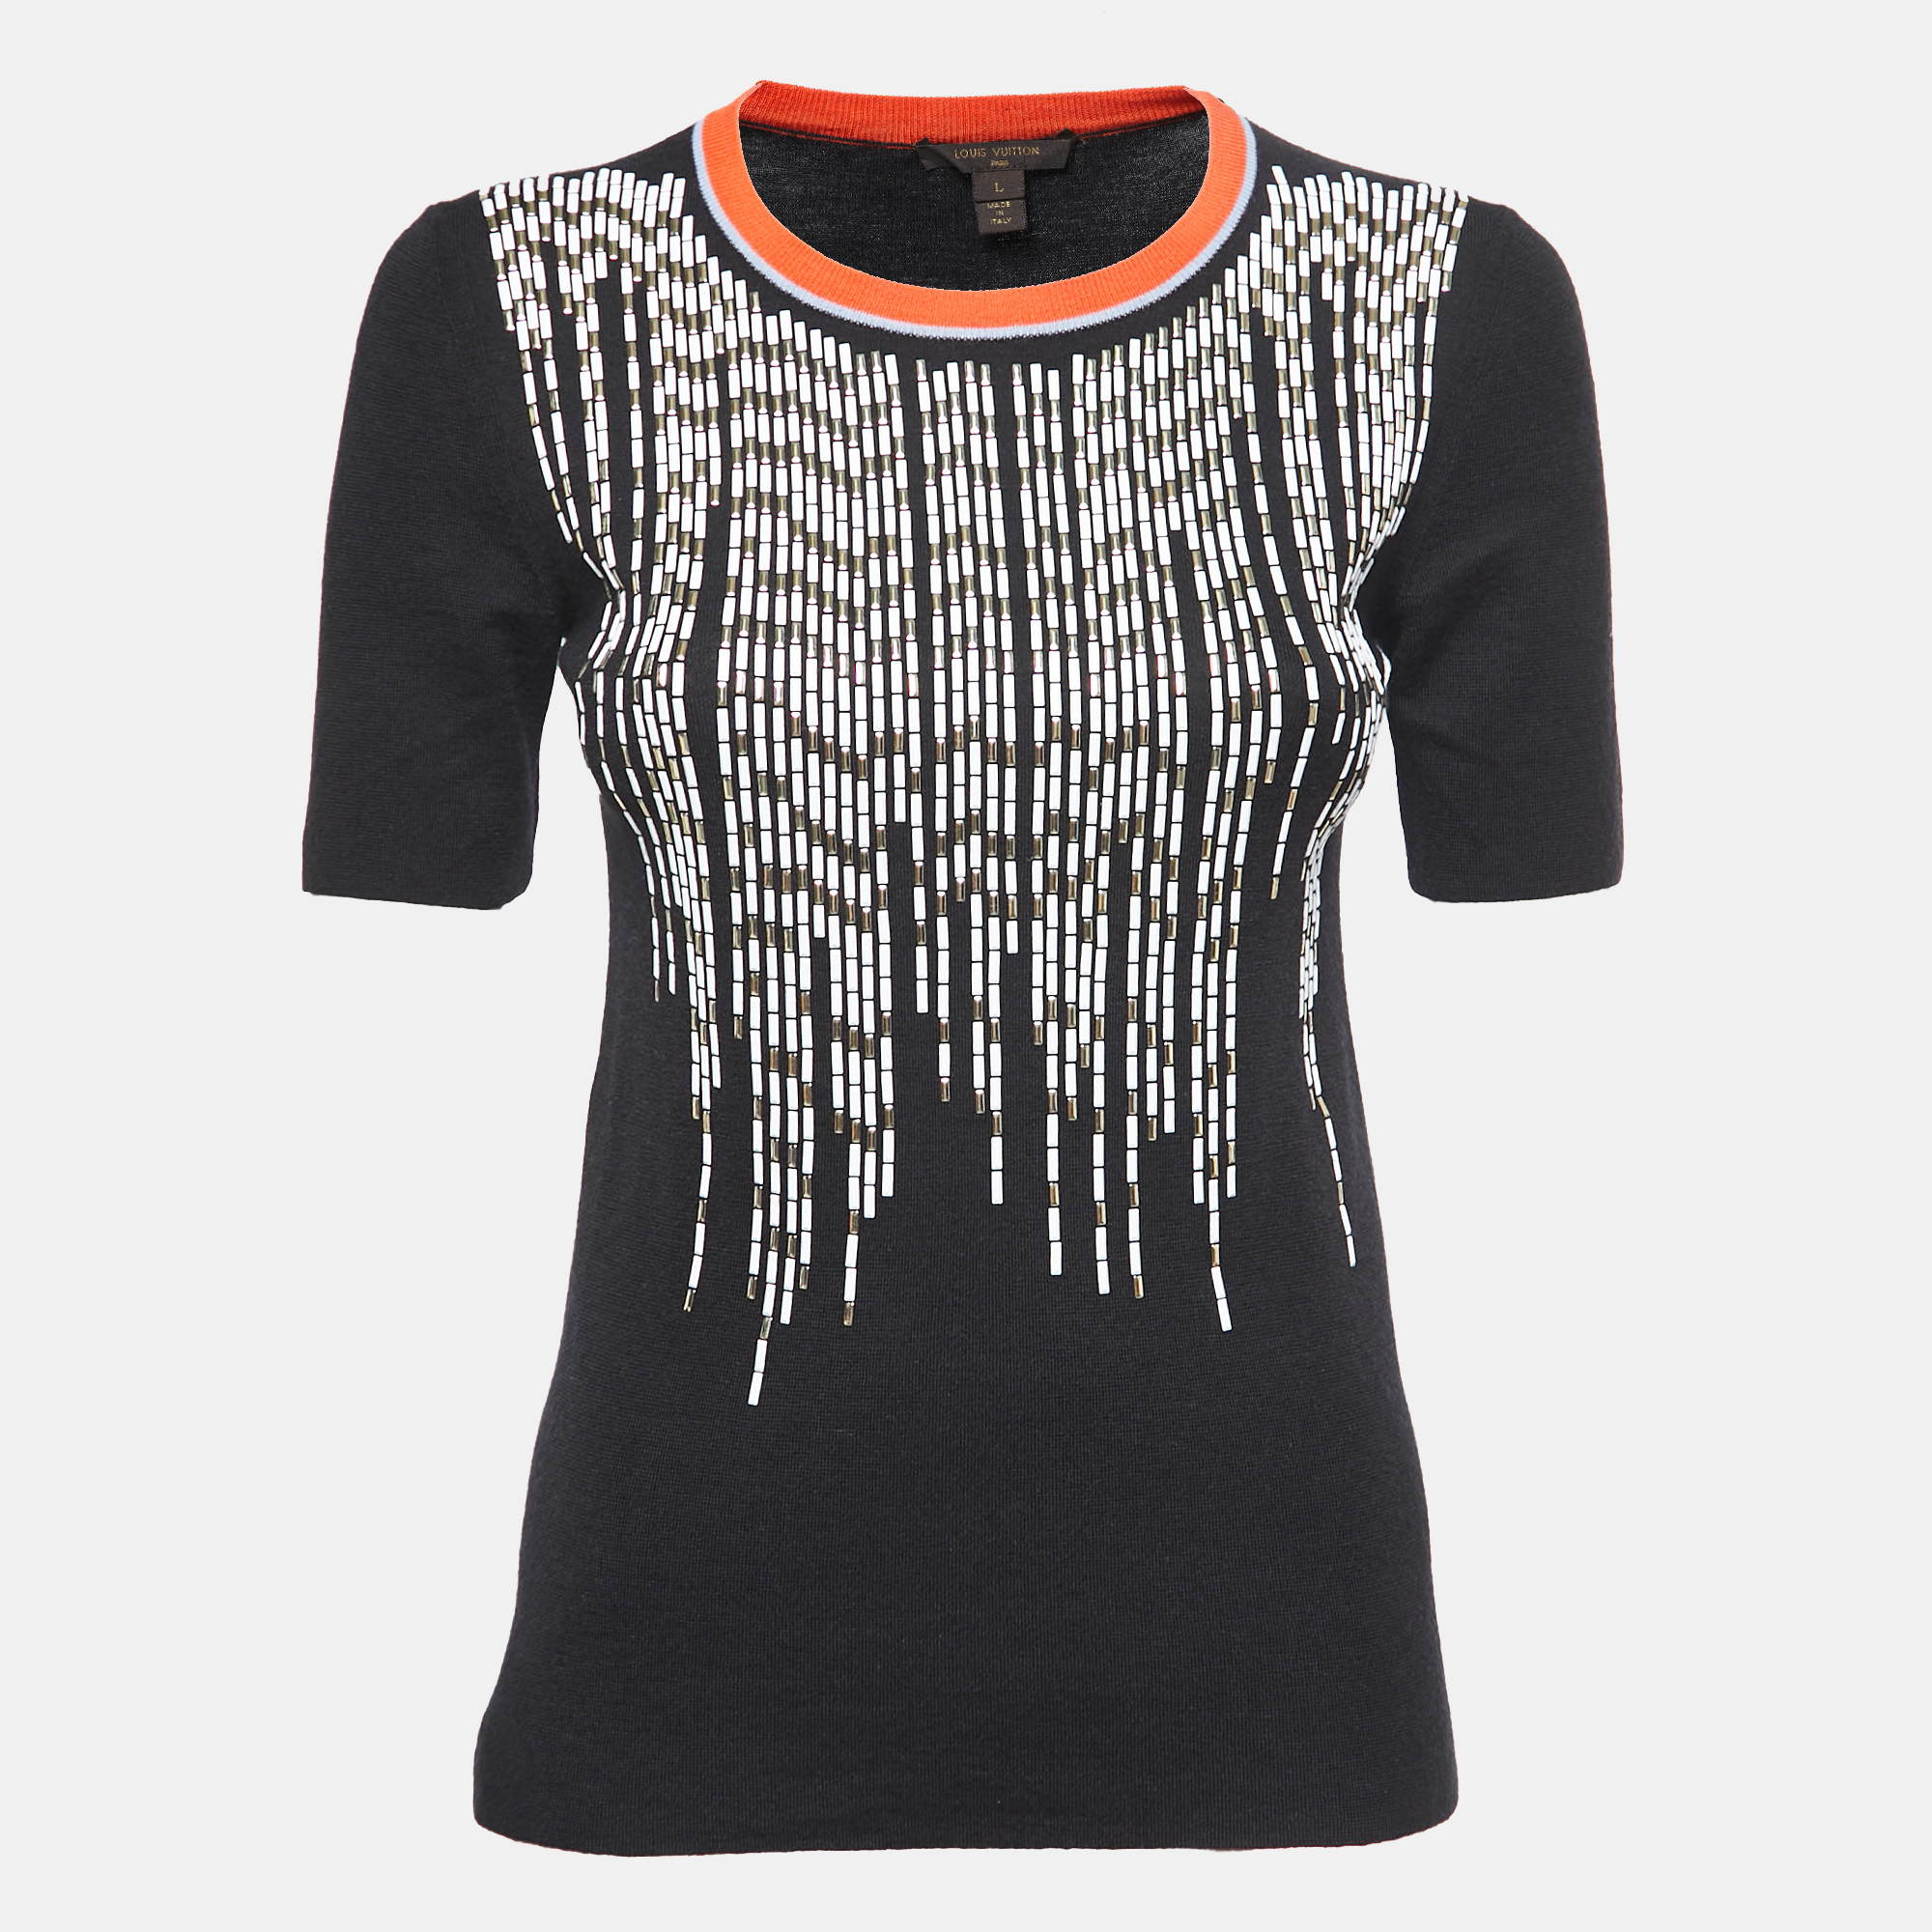 Louis Vuitton Black Cashmere & Silk Knit Embellished Top L